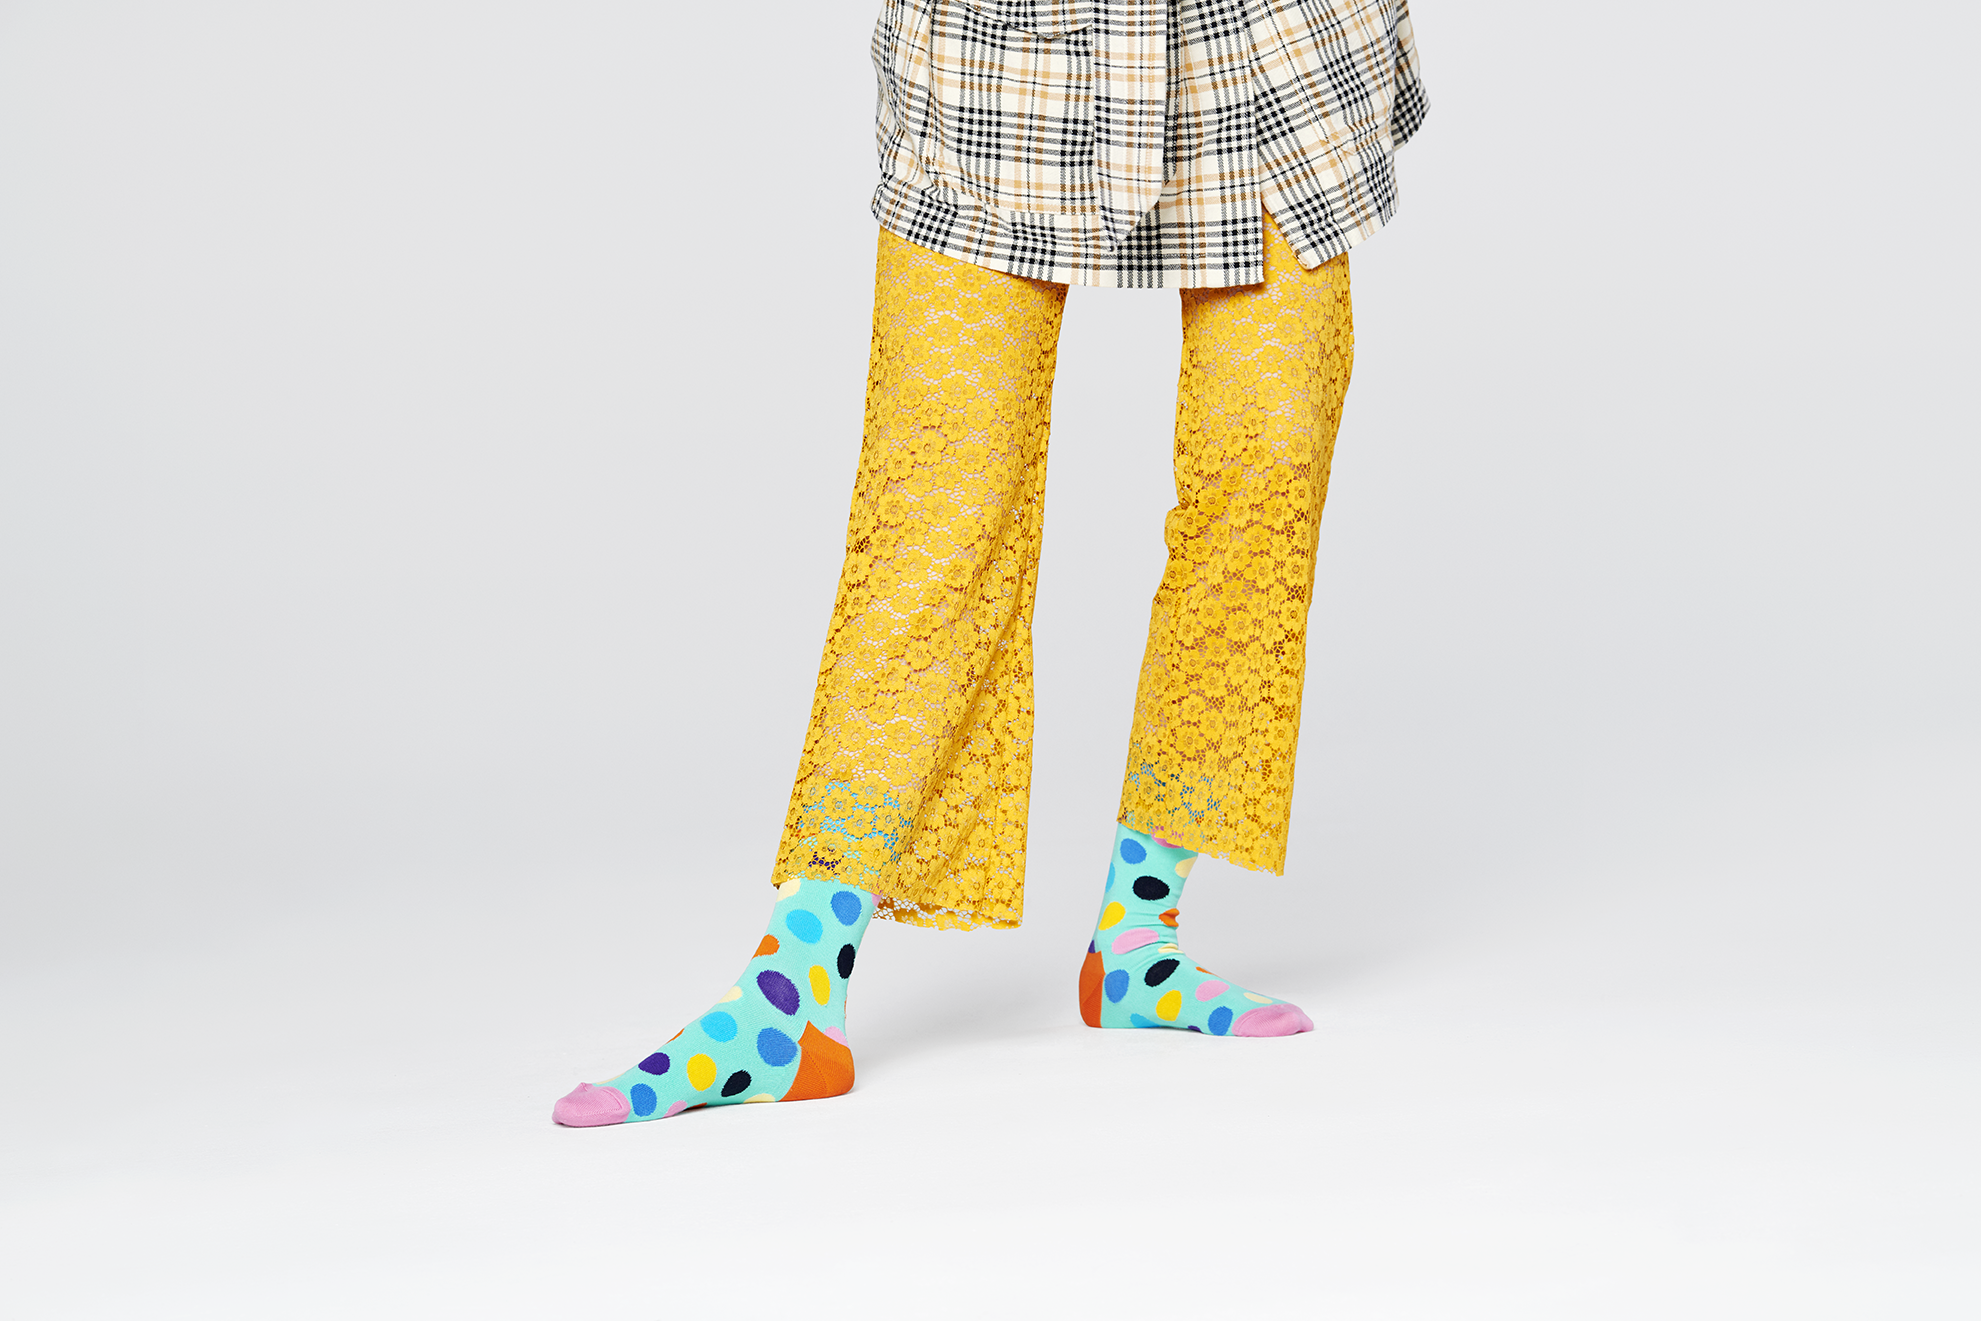 Tyrkysové ponožky Happy Socks s barevnými puntíky, vzor Big Dot